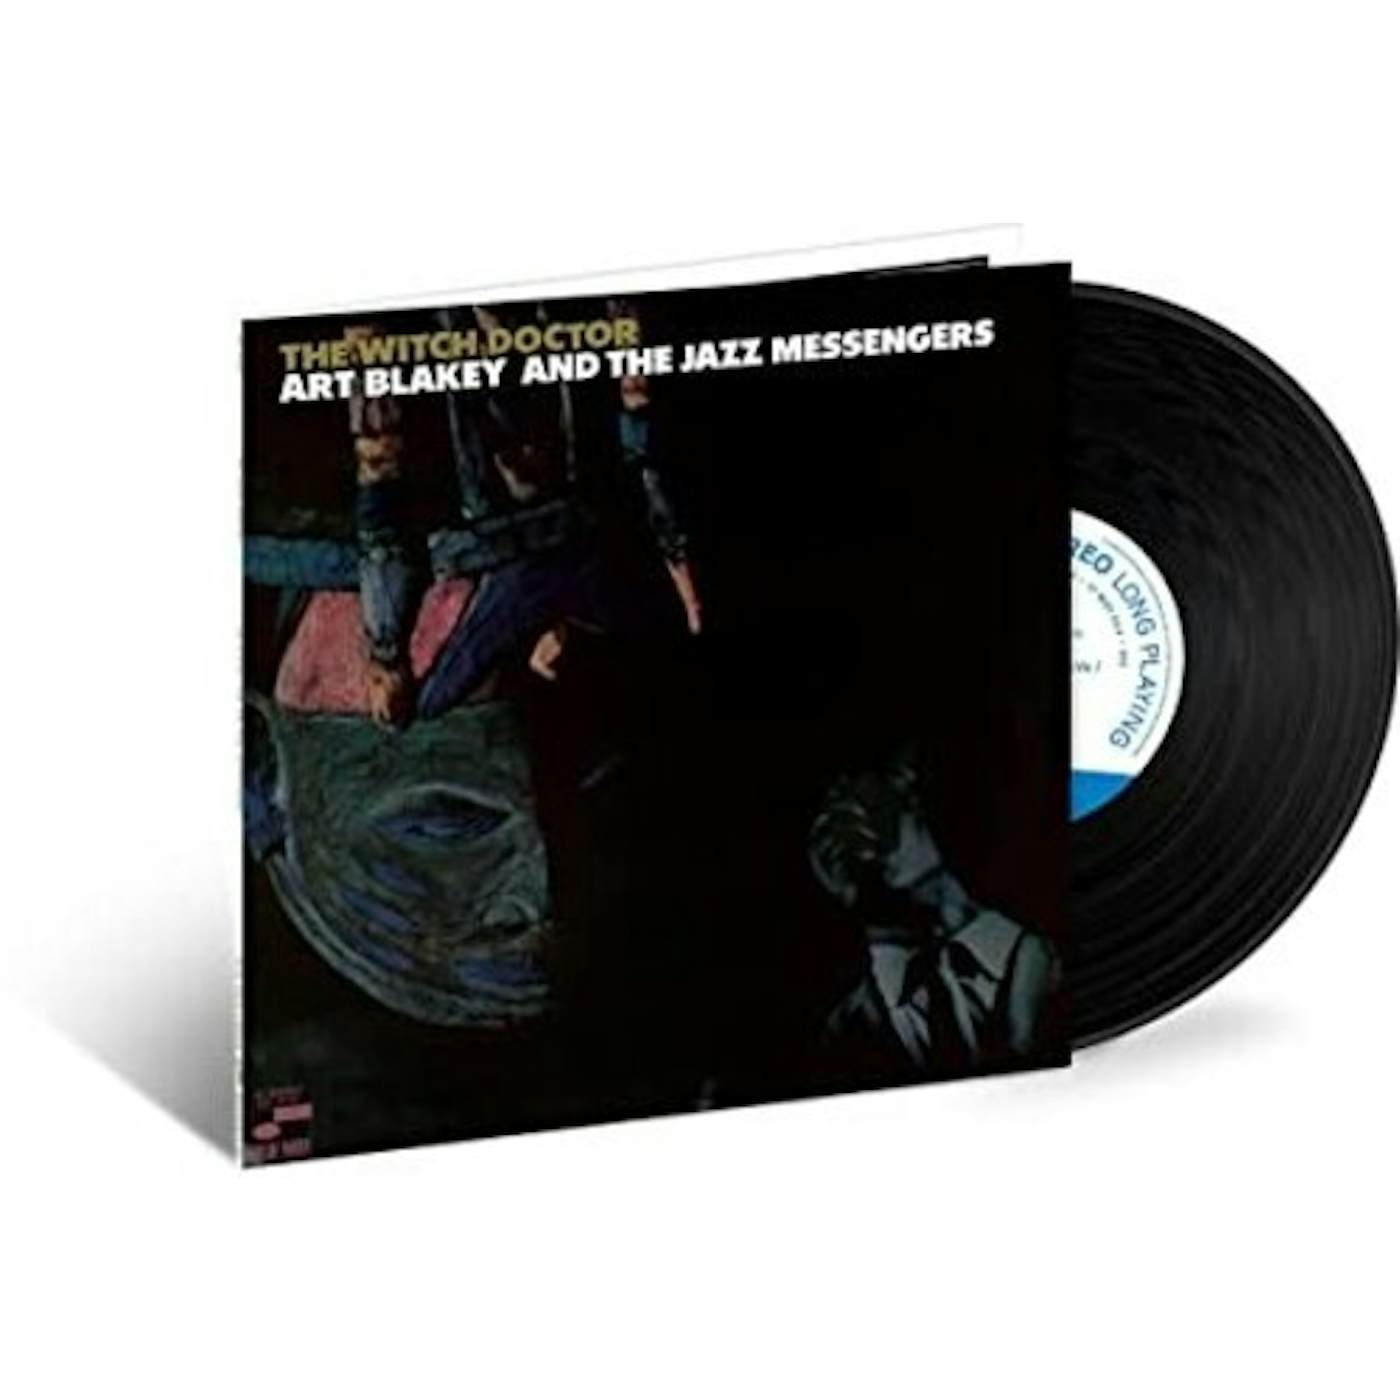 Art Blakey & The Jazz Messengers WITCH DOCTOR Vinyl Record